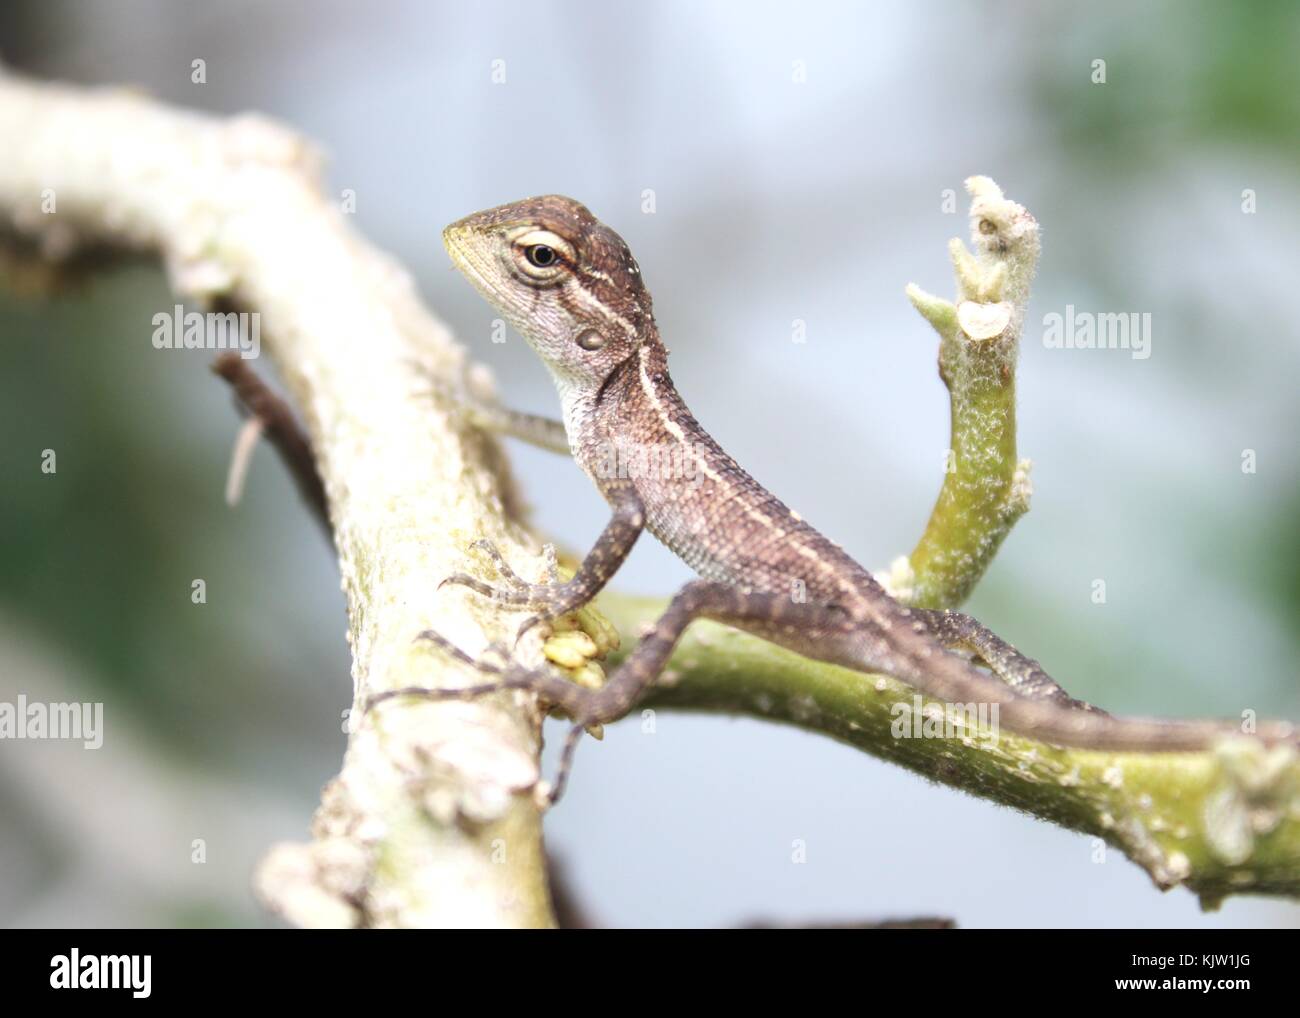 close up of a small baby garden lizard / tree lizard seen in  Sri Lanka Stock Photo